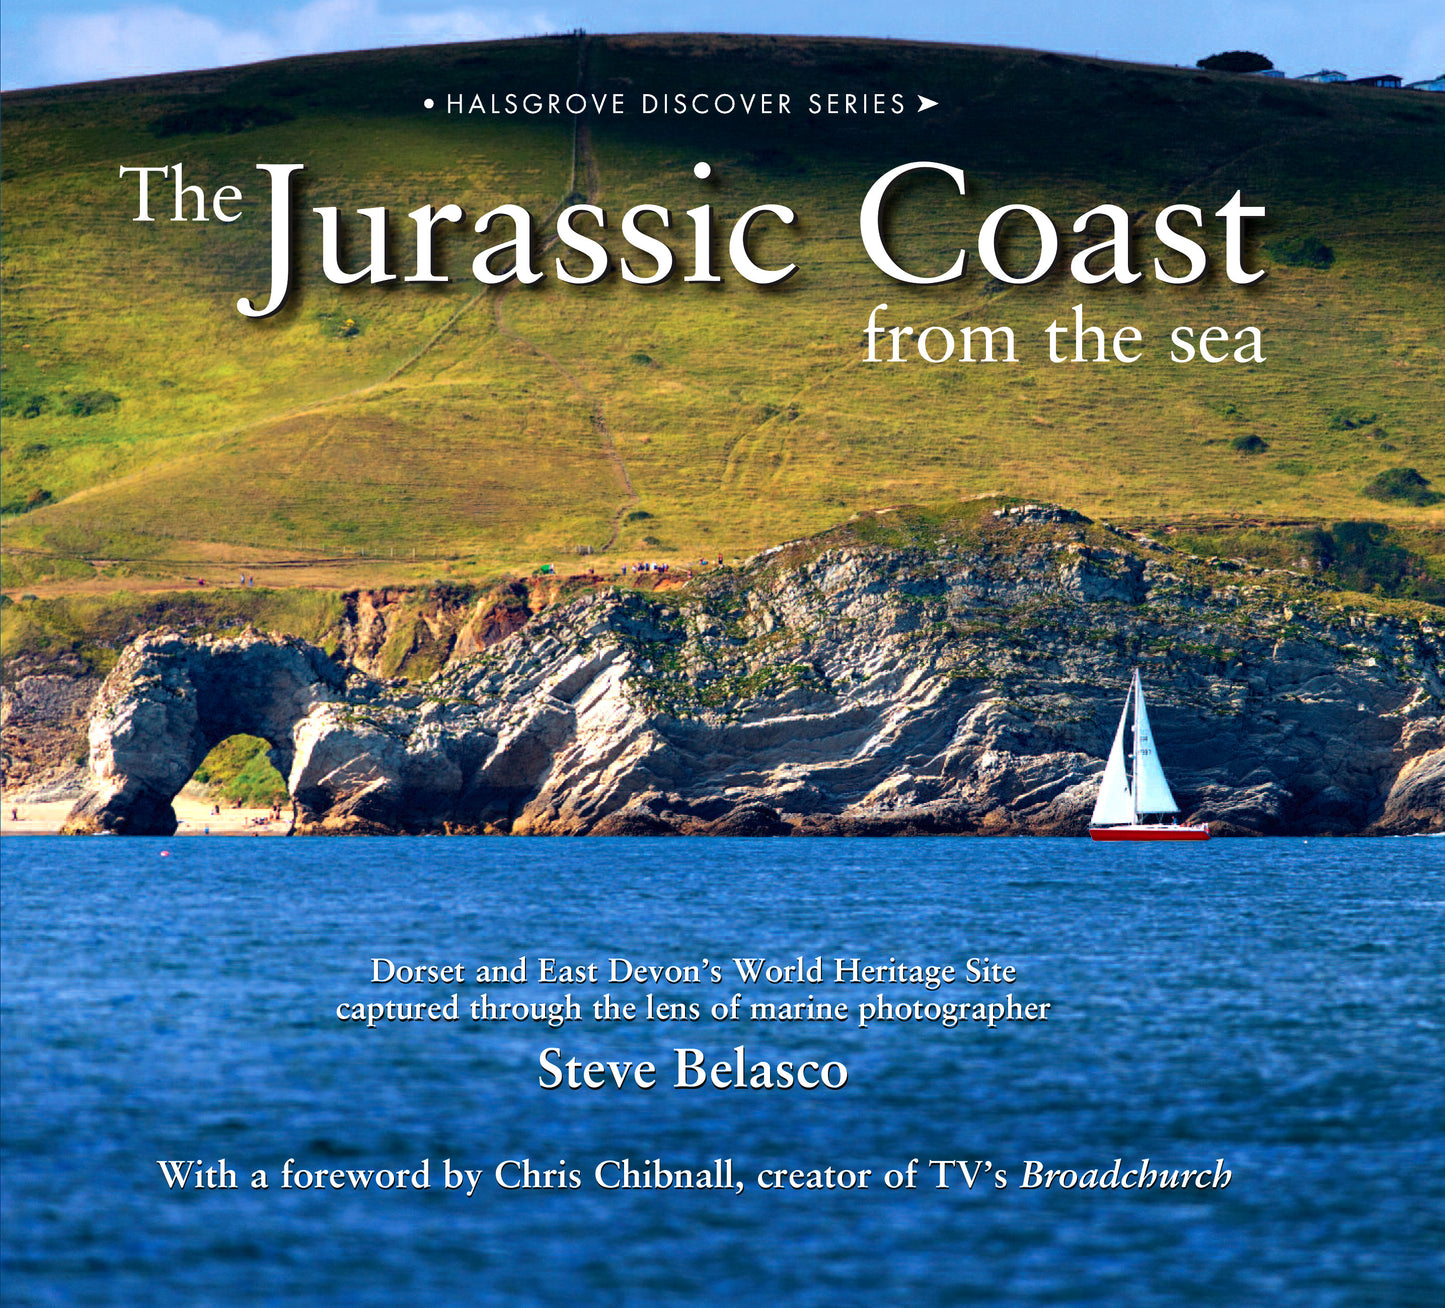 The Jurassic Coast from the Sea by Steve Belasco